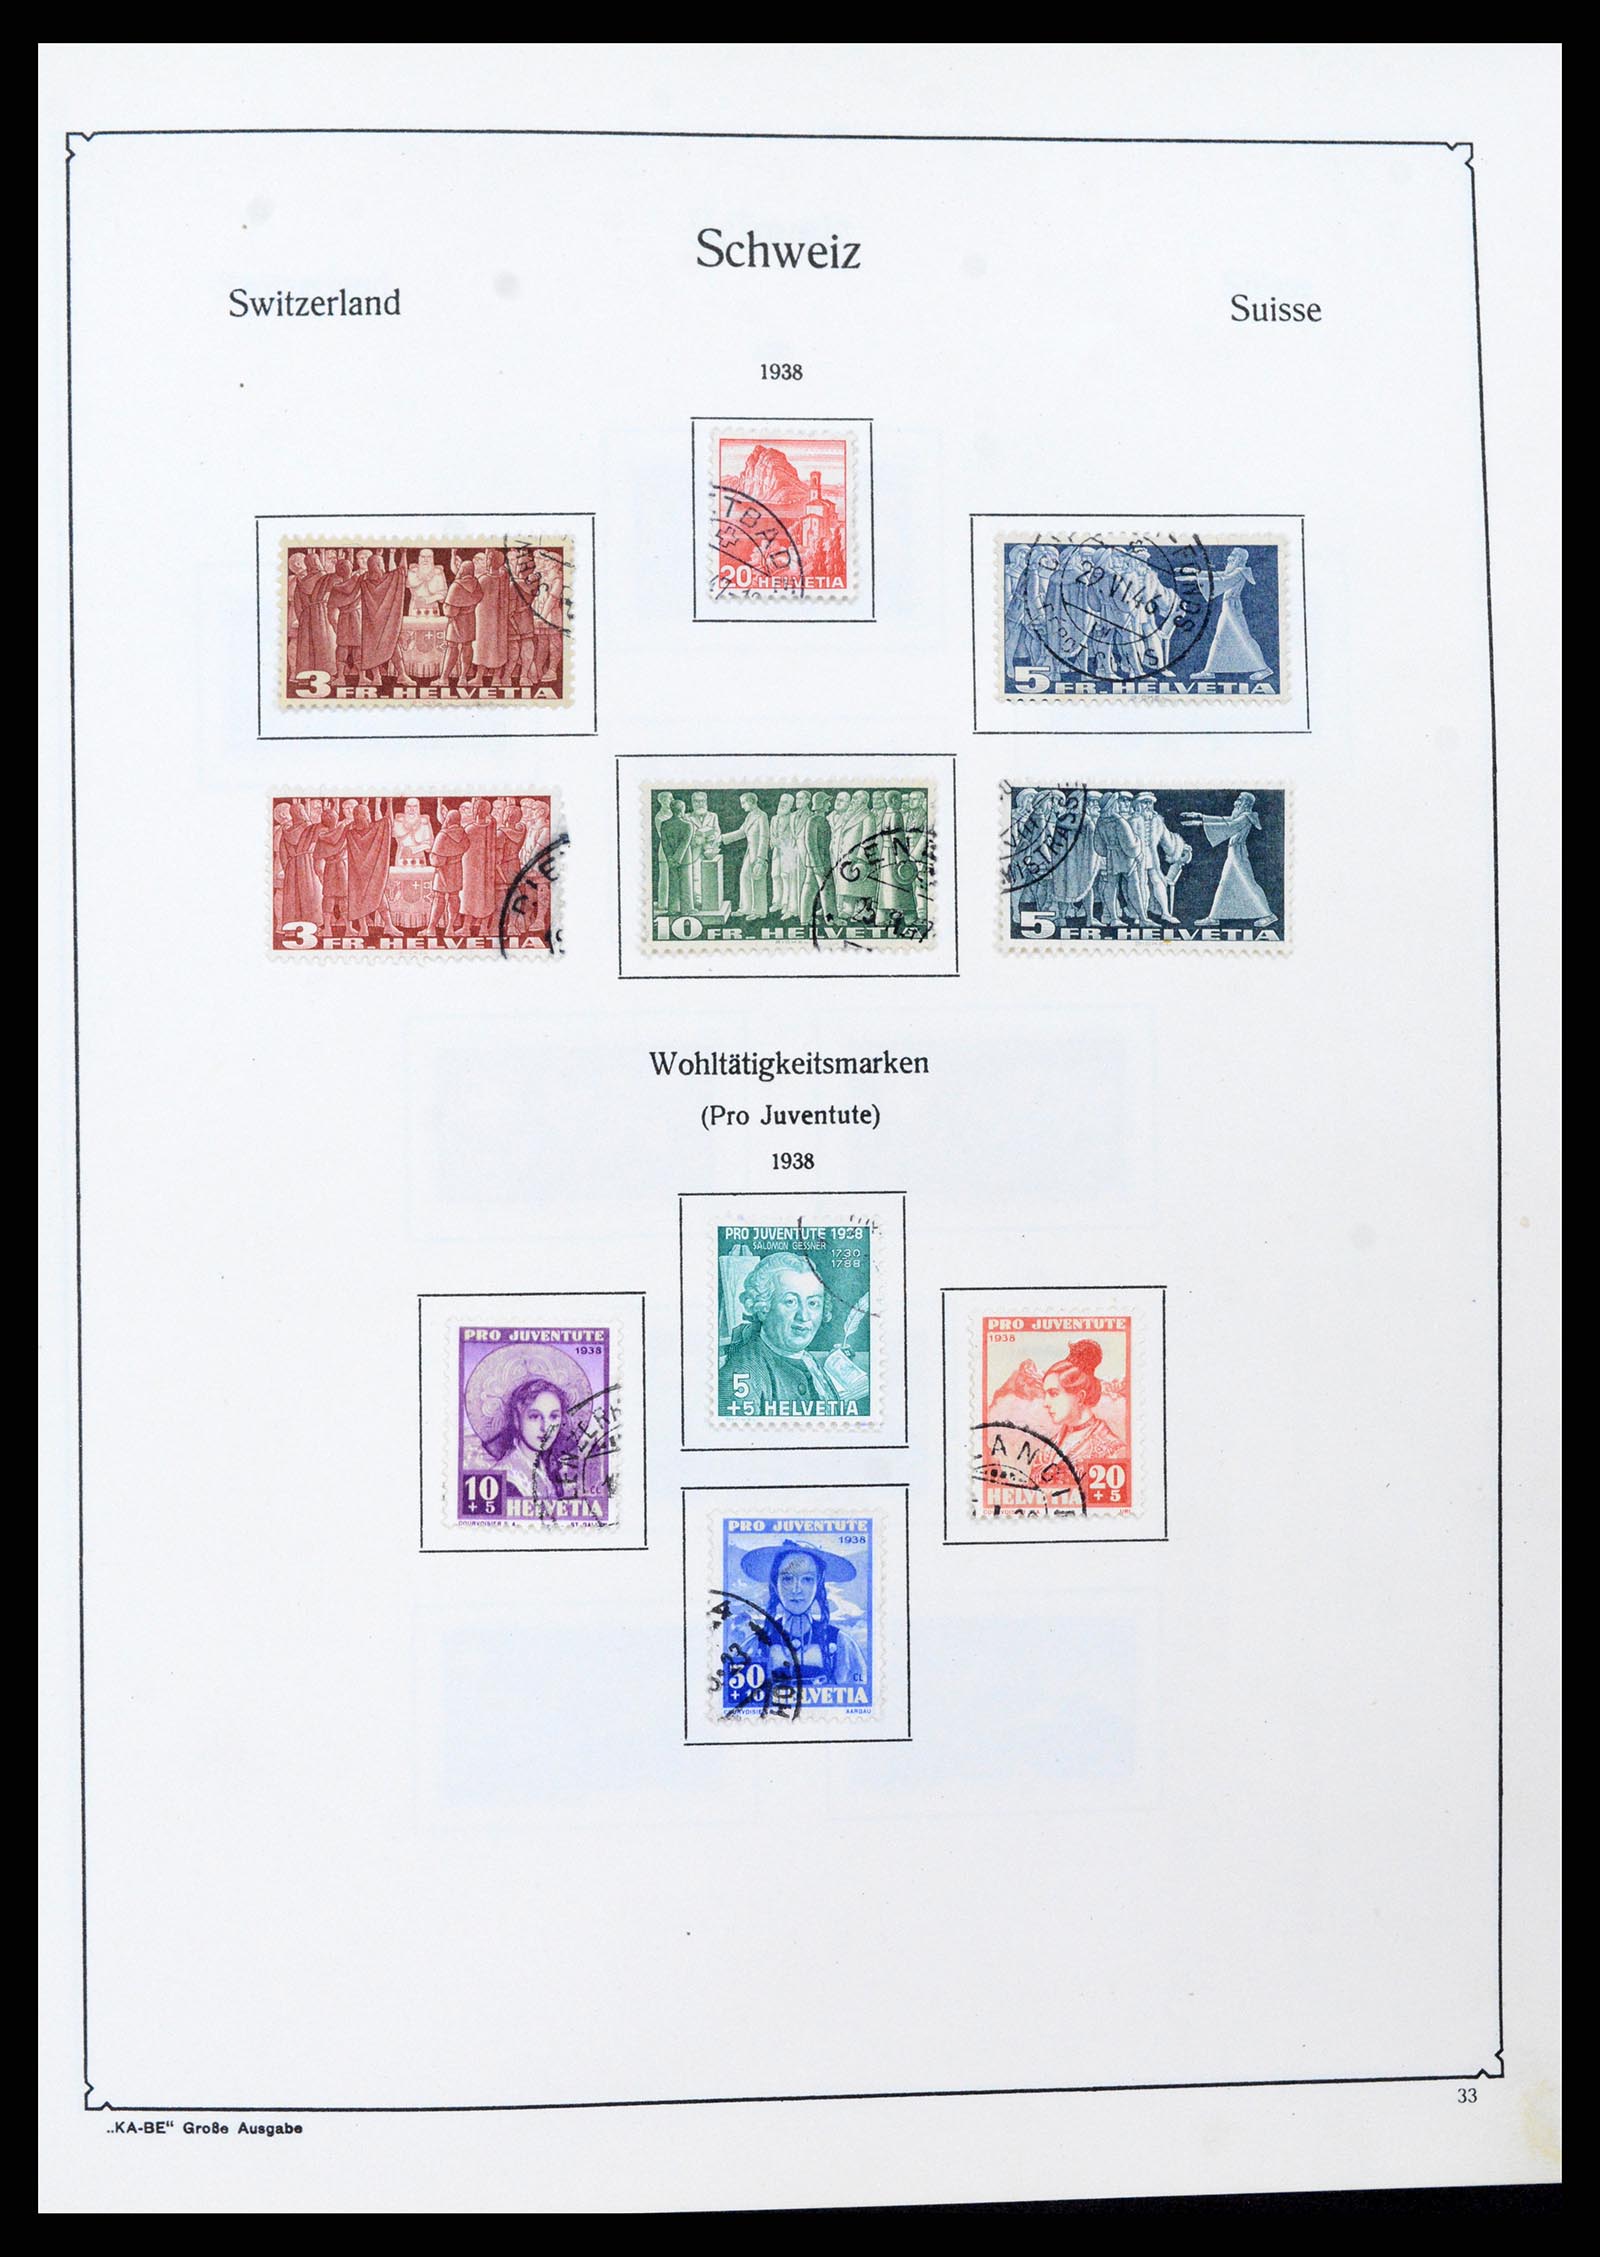 37588 032 - Stamp collection 37588 Switzerland 1854-1974.